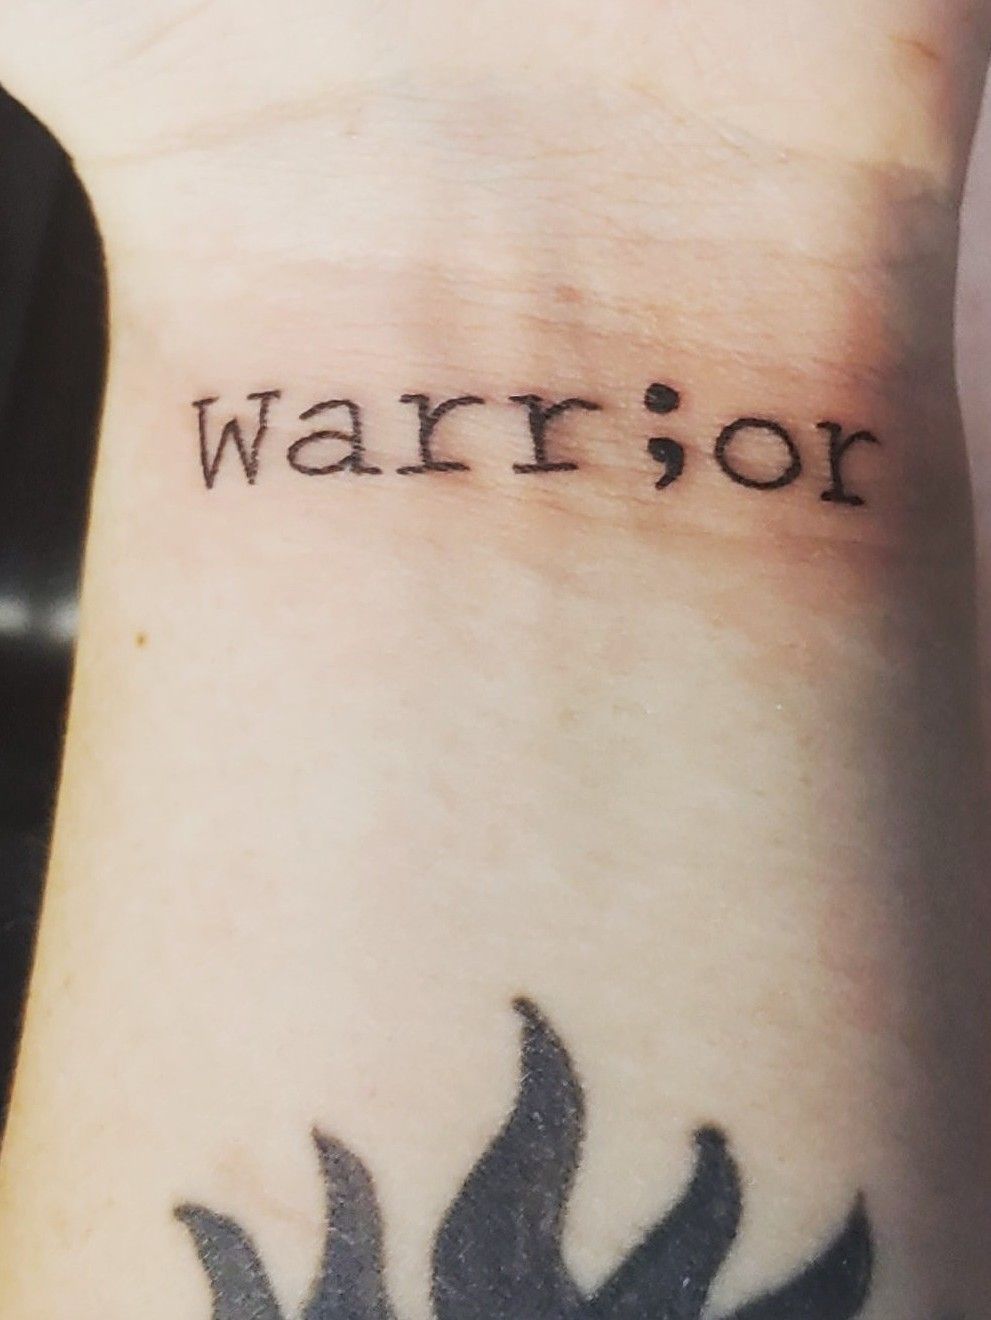 Warrior semicolon tattoo ink still wet  Ink tattoo Semicolon tattoo  Tattoos